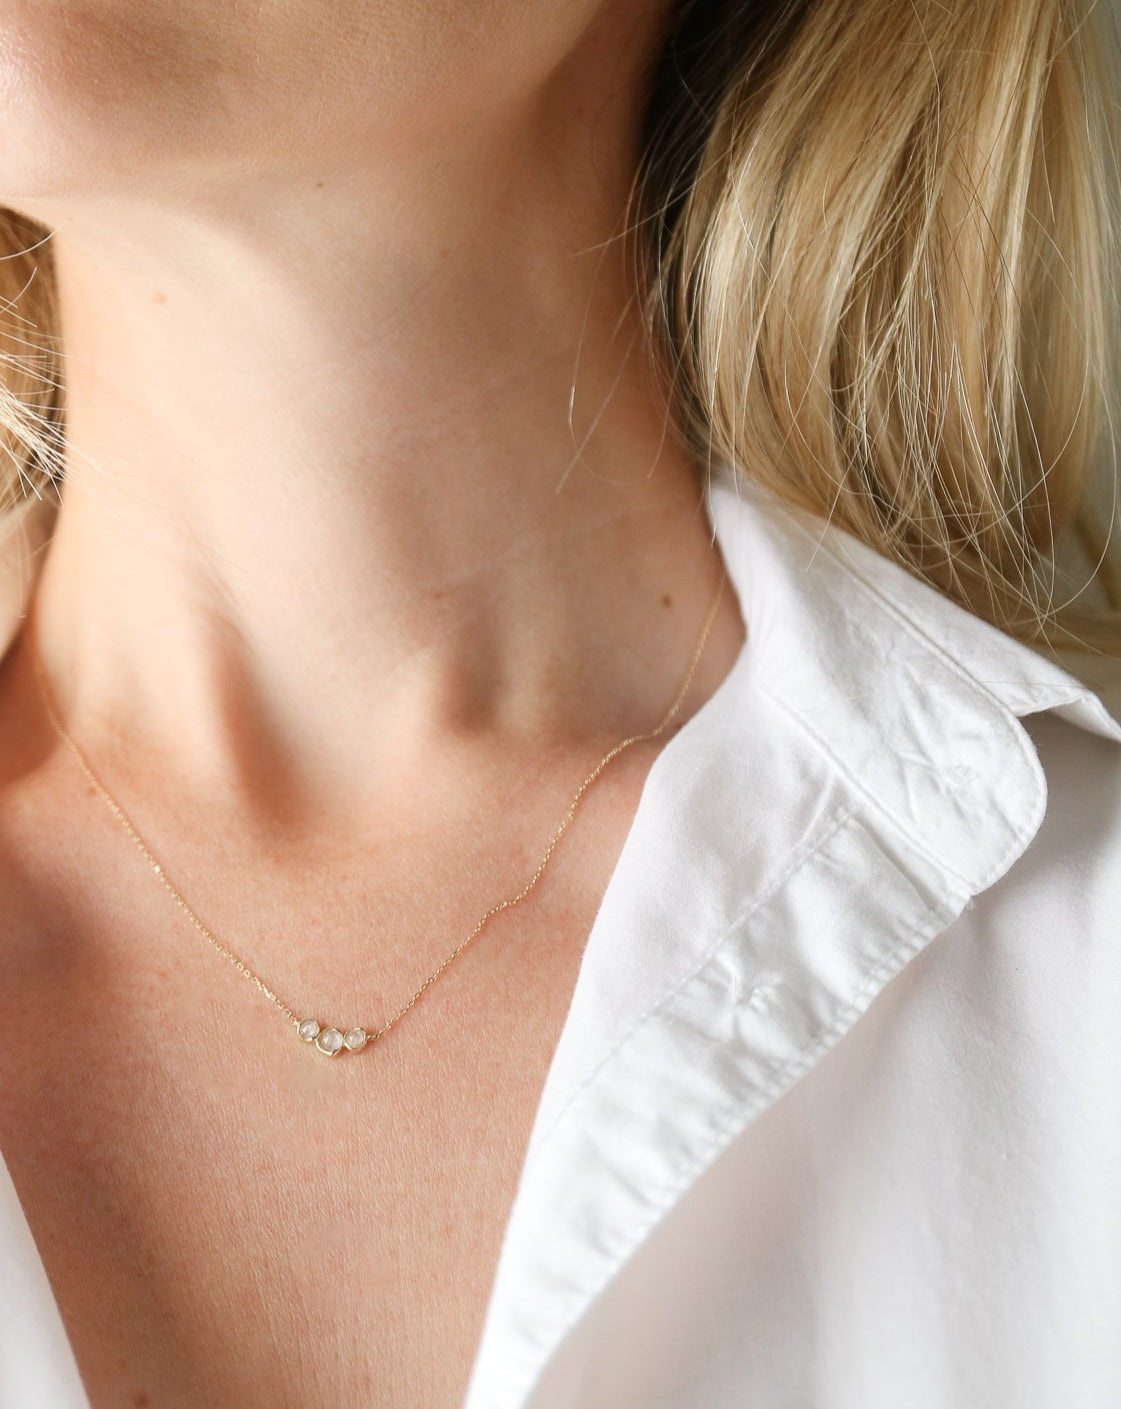 Opal Necklace on female neck